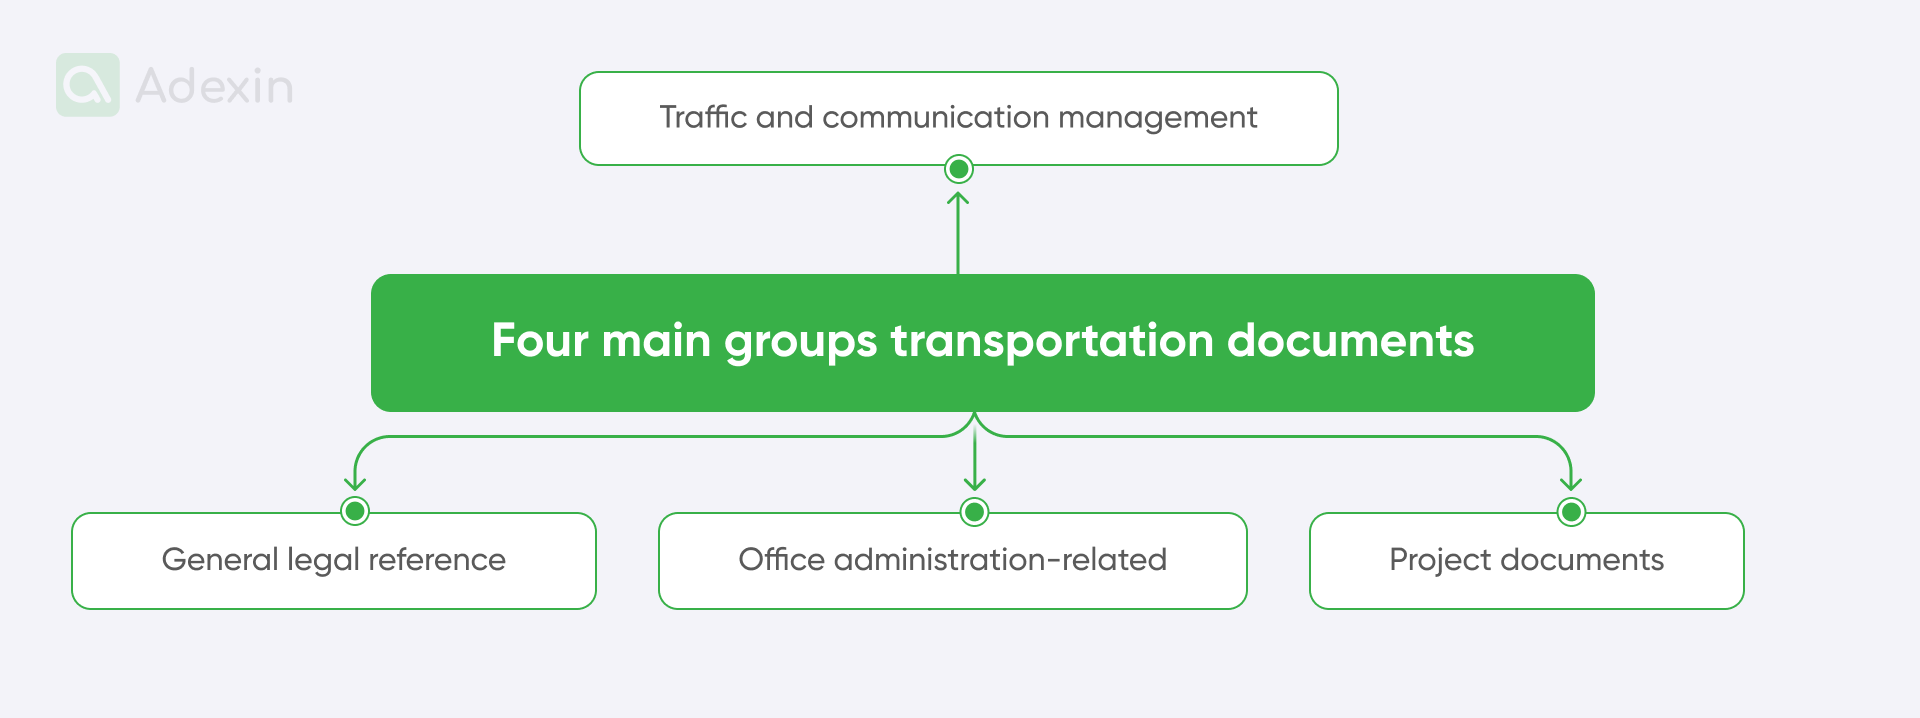 Four main groups transportation documents 